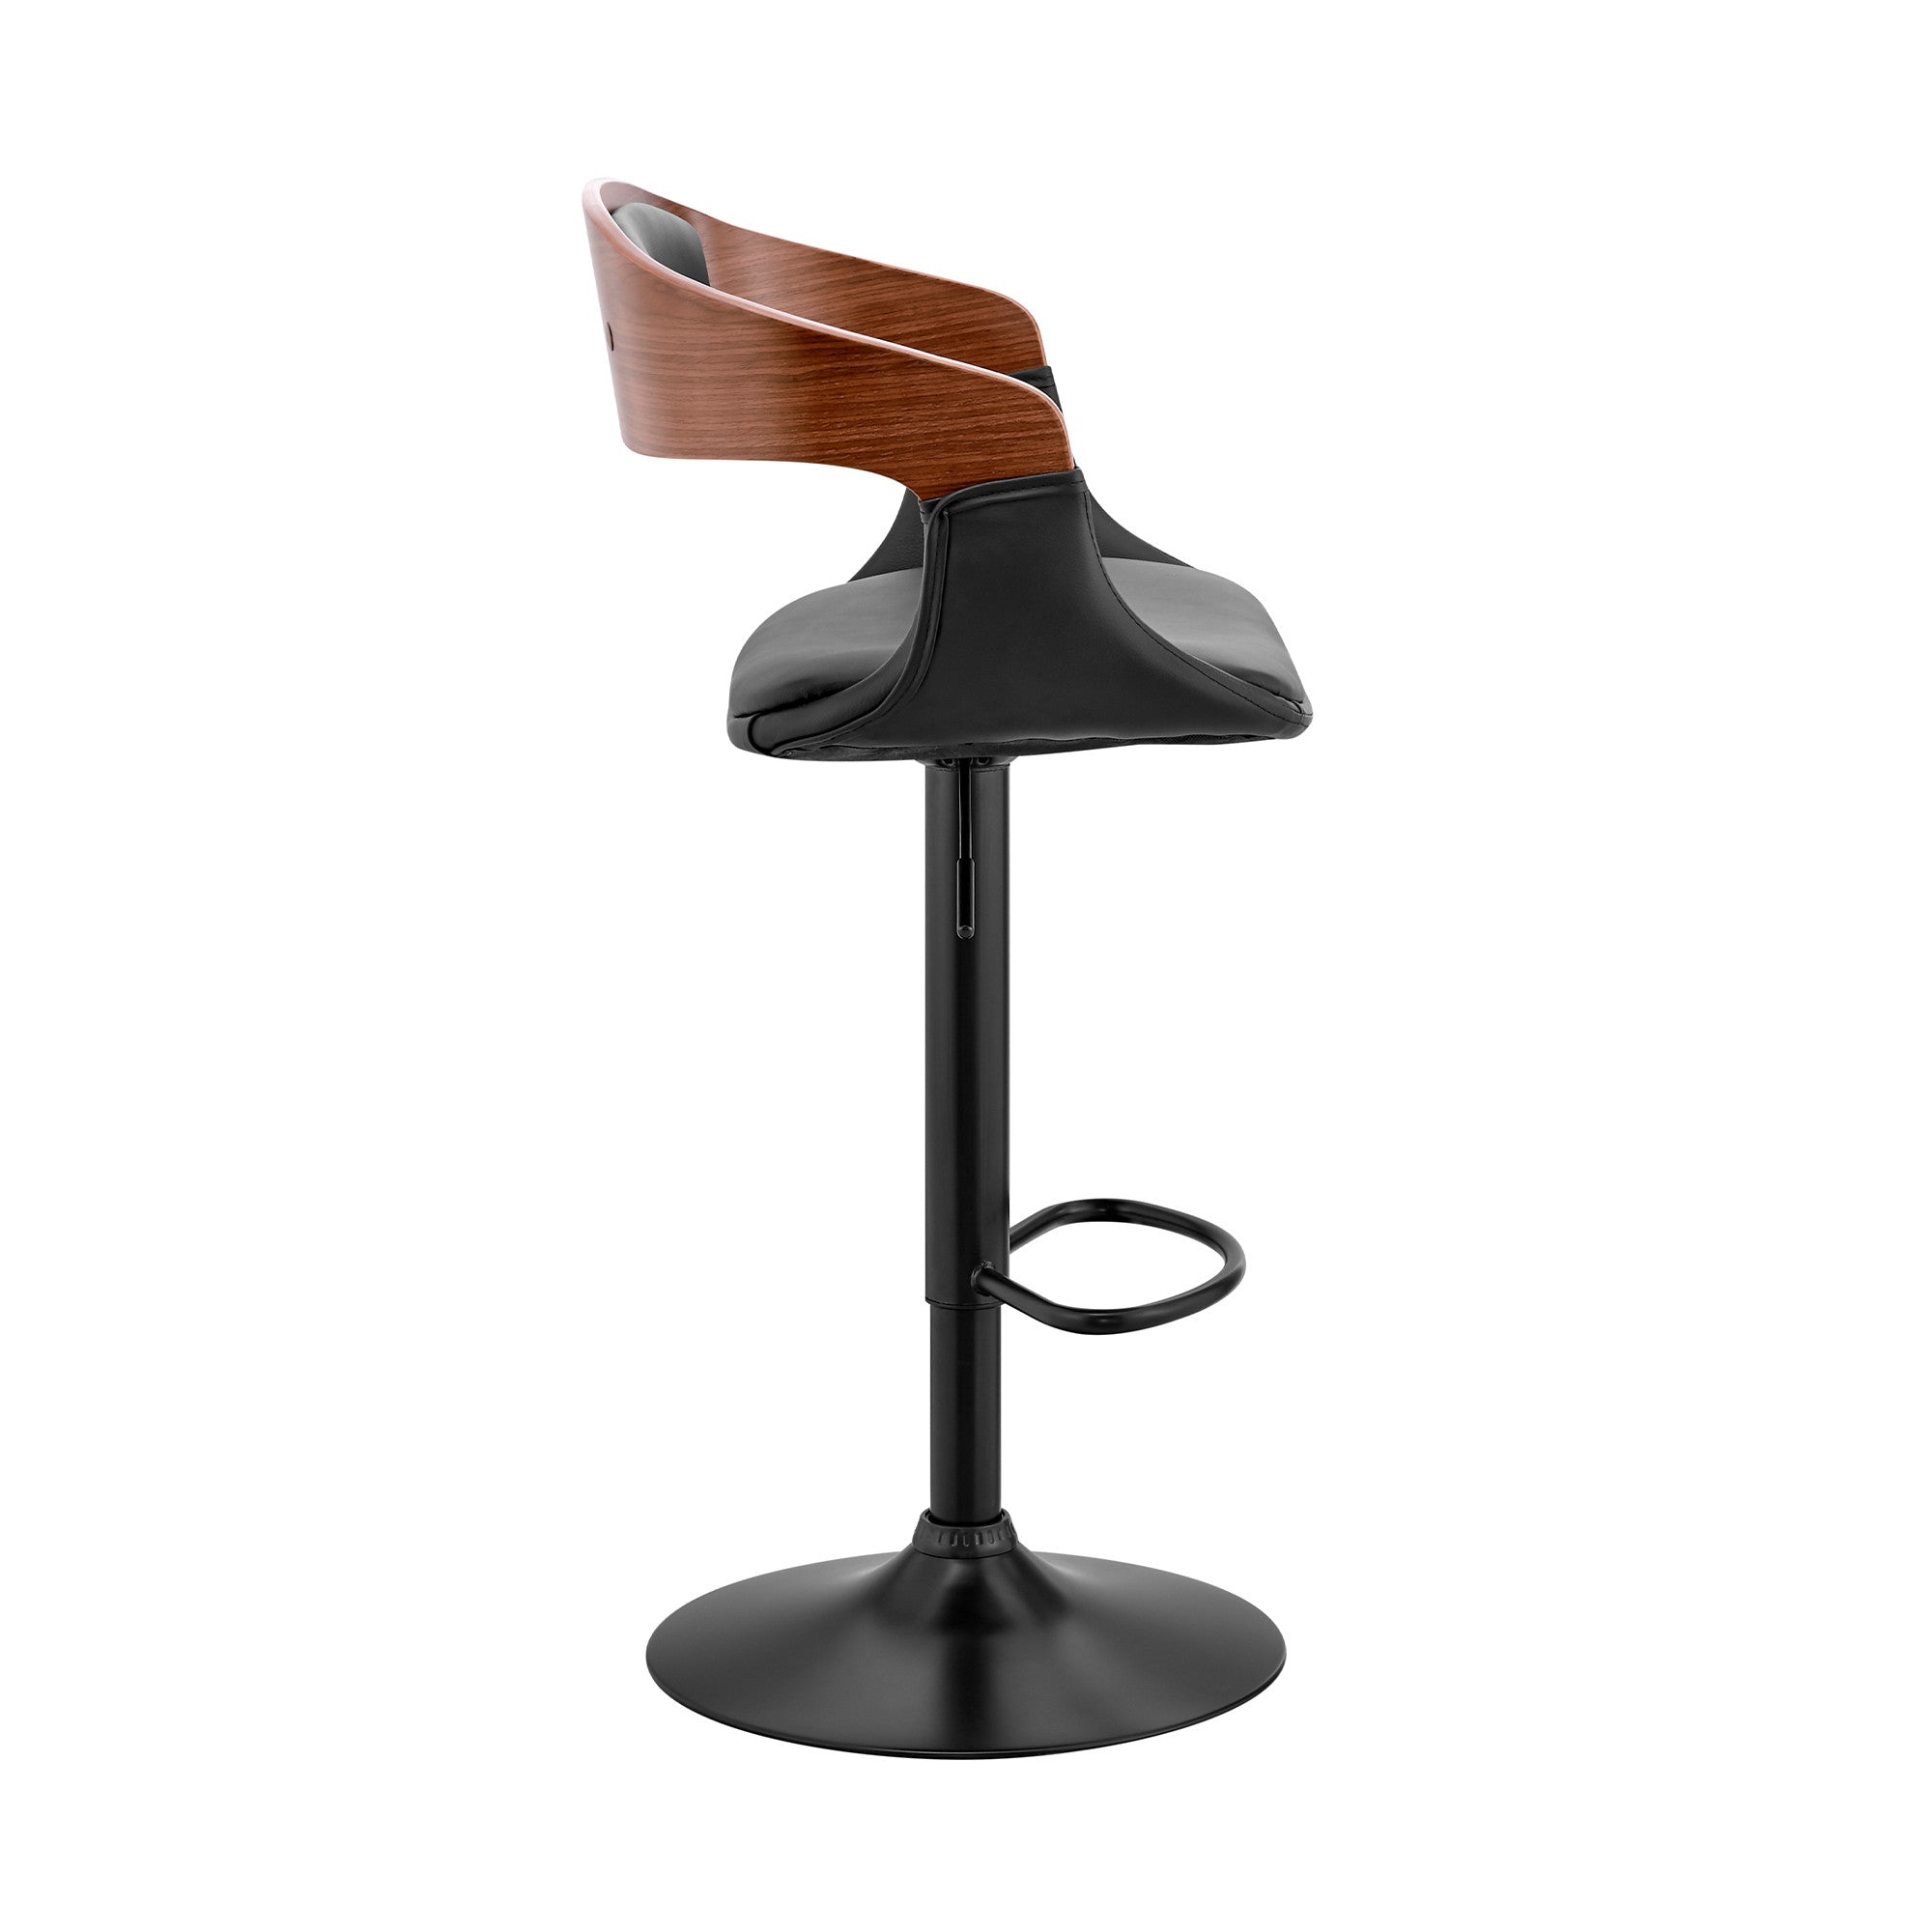 24" Black Iron Swivel Low Back Adjustable Height Bar Chair